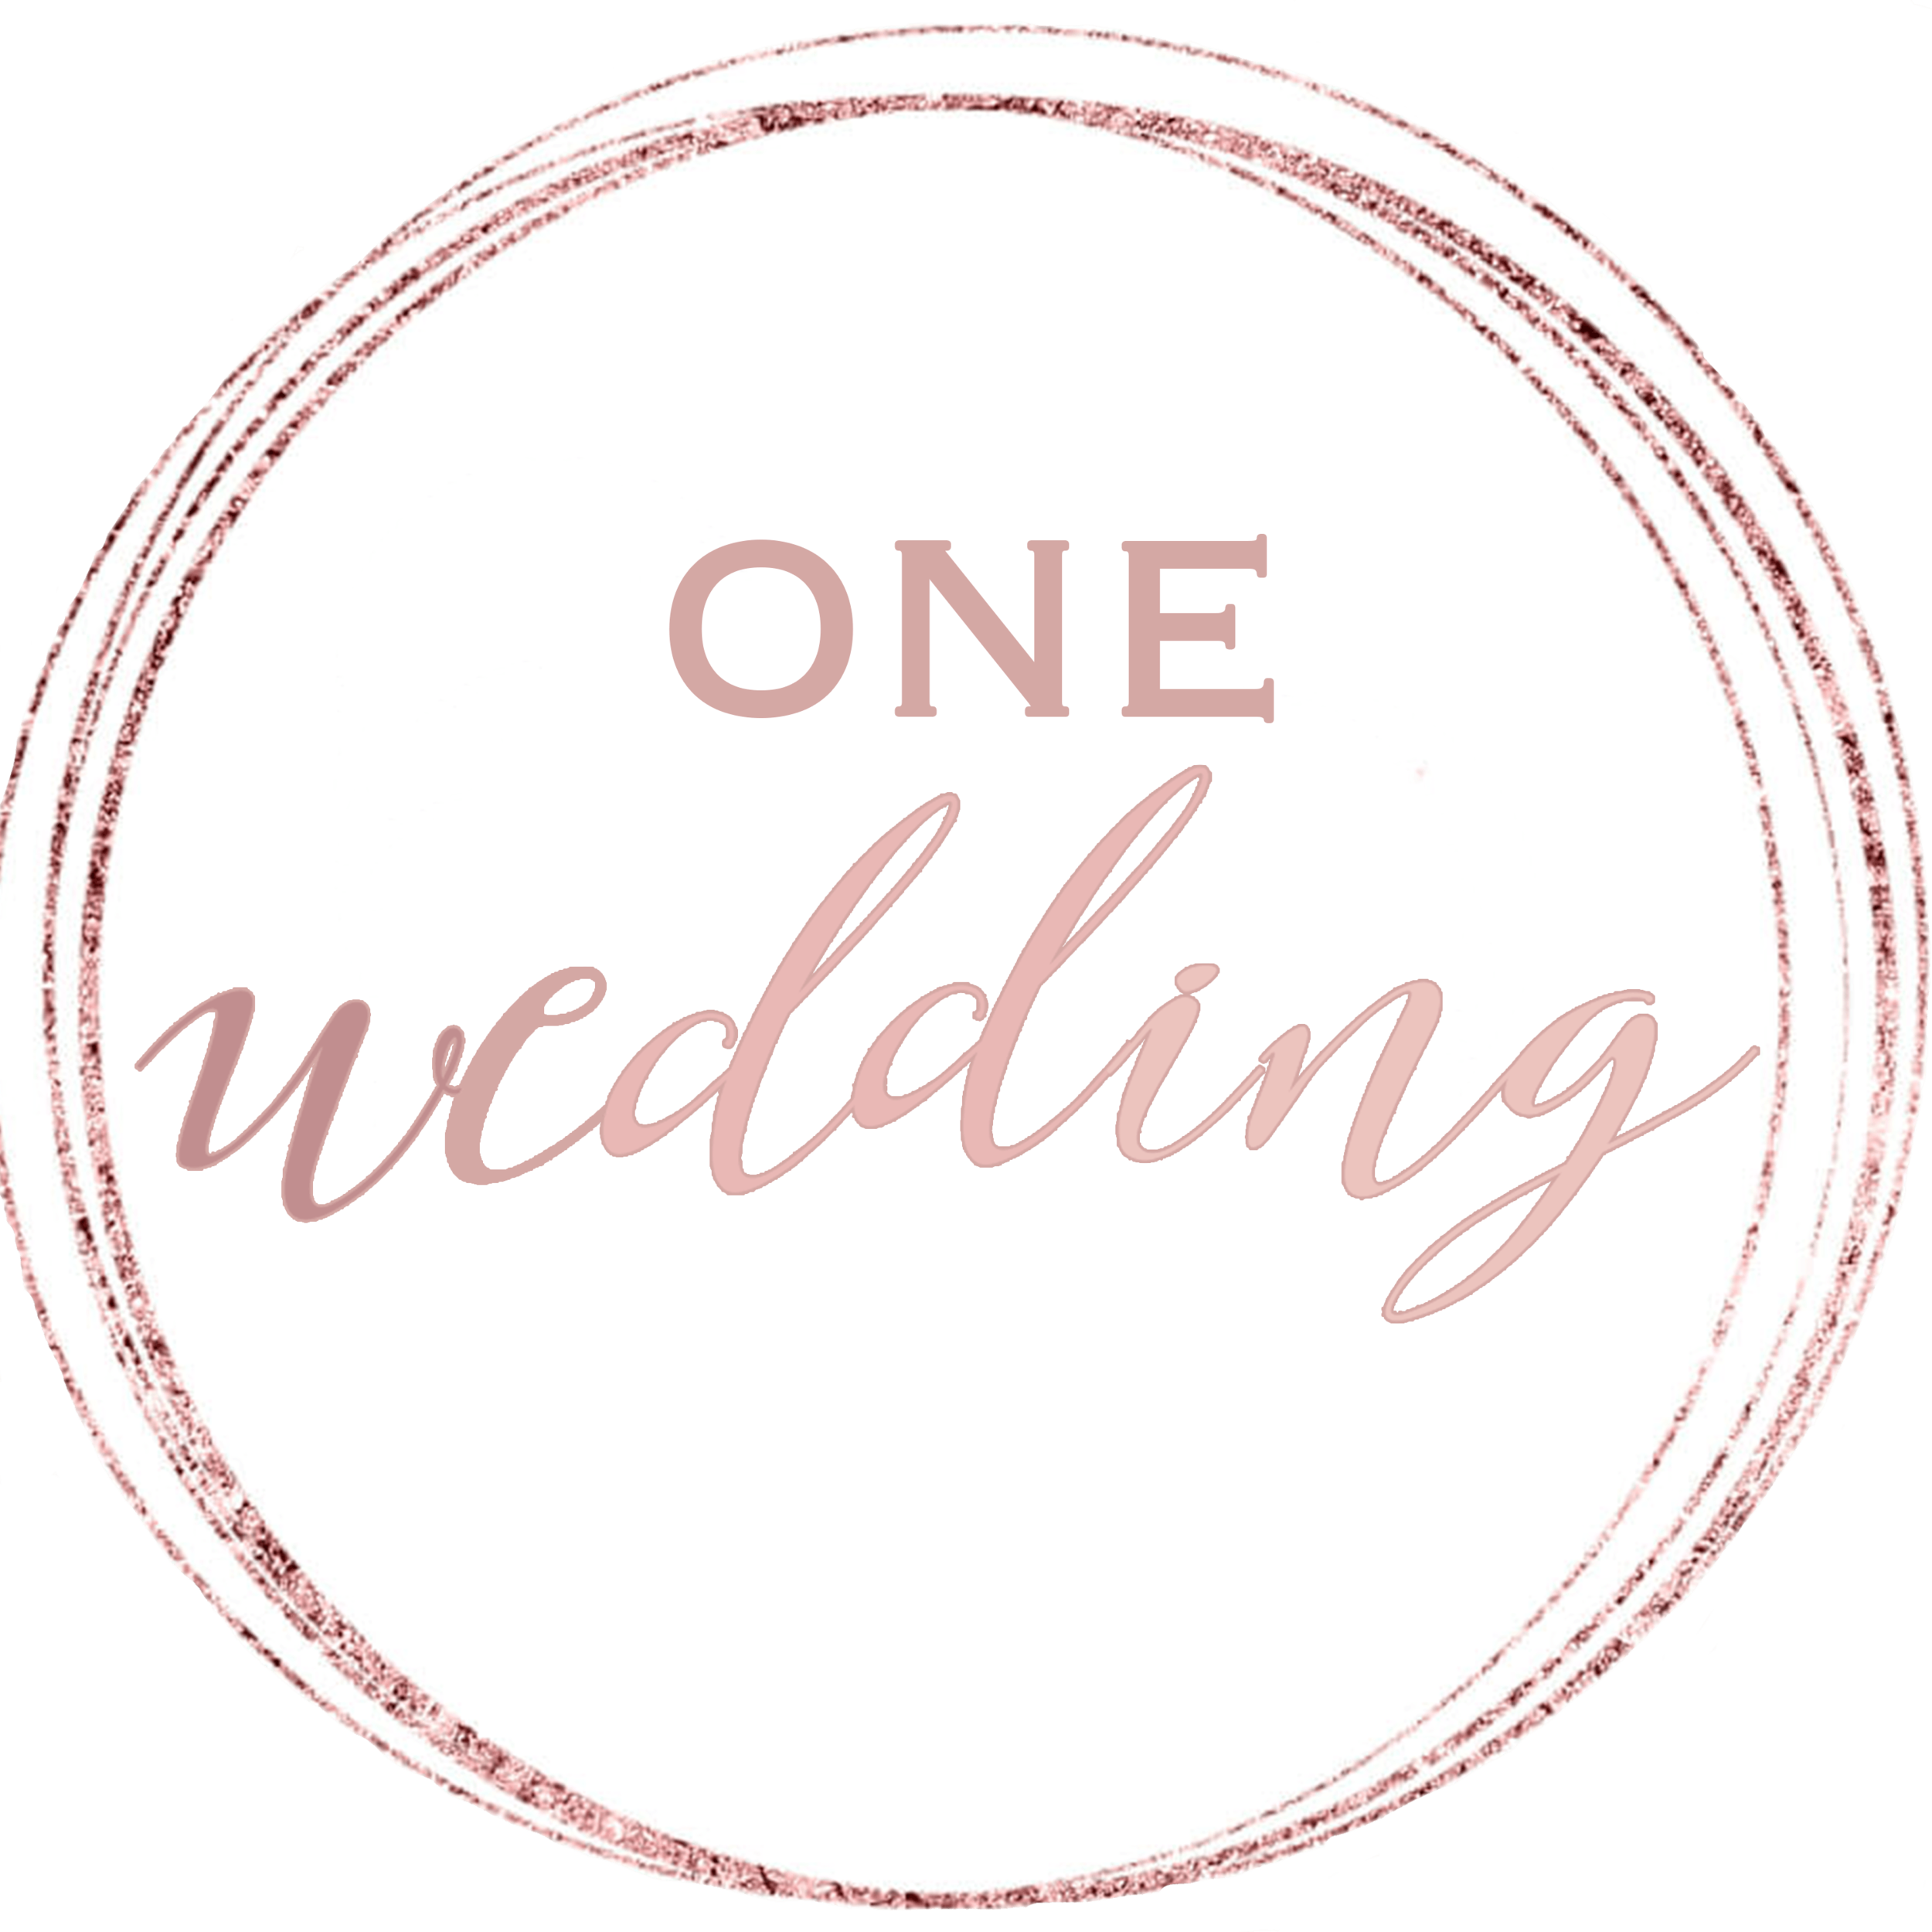 ONE WEDDING